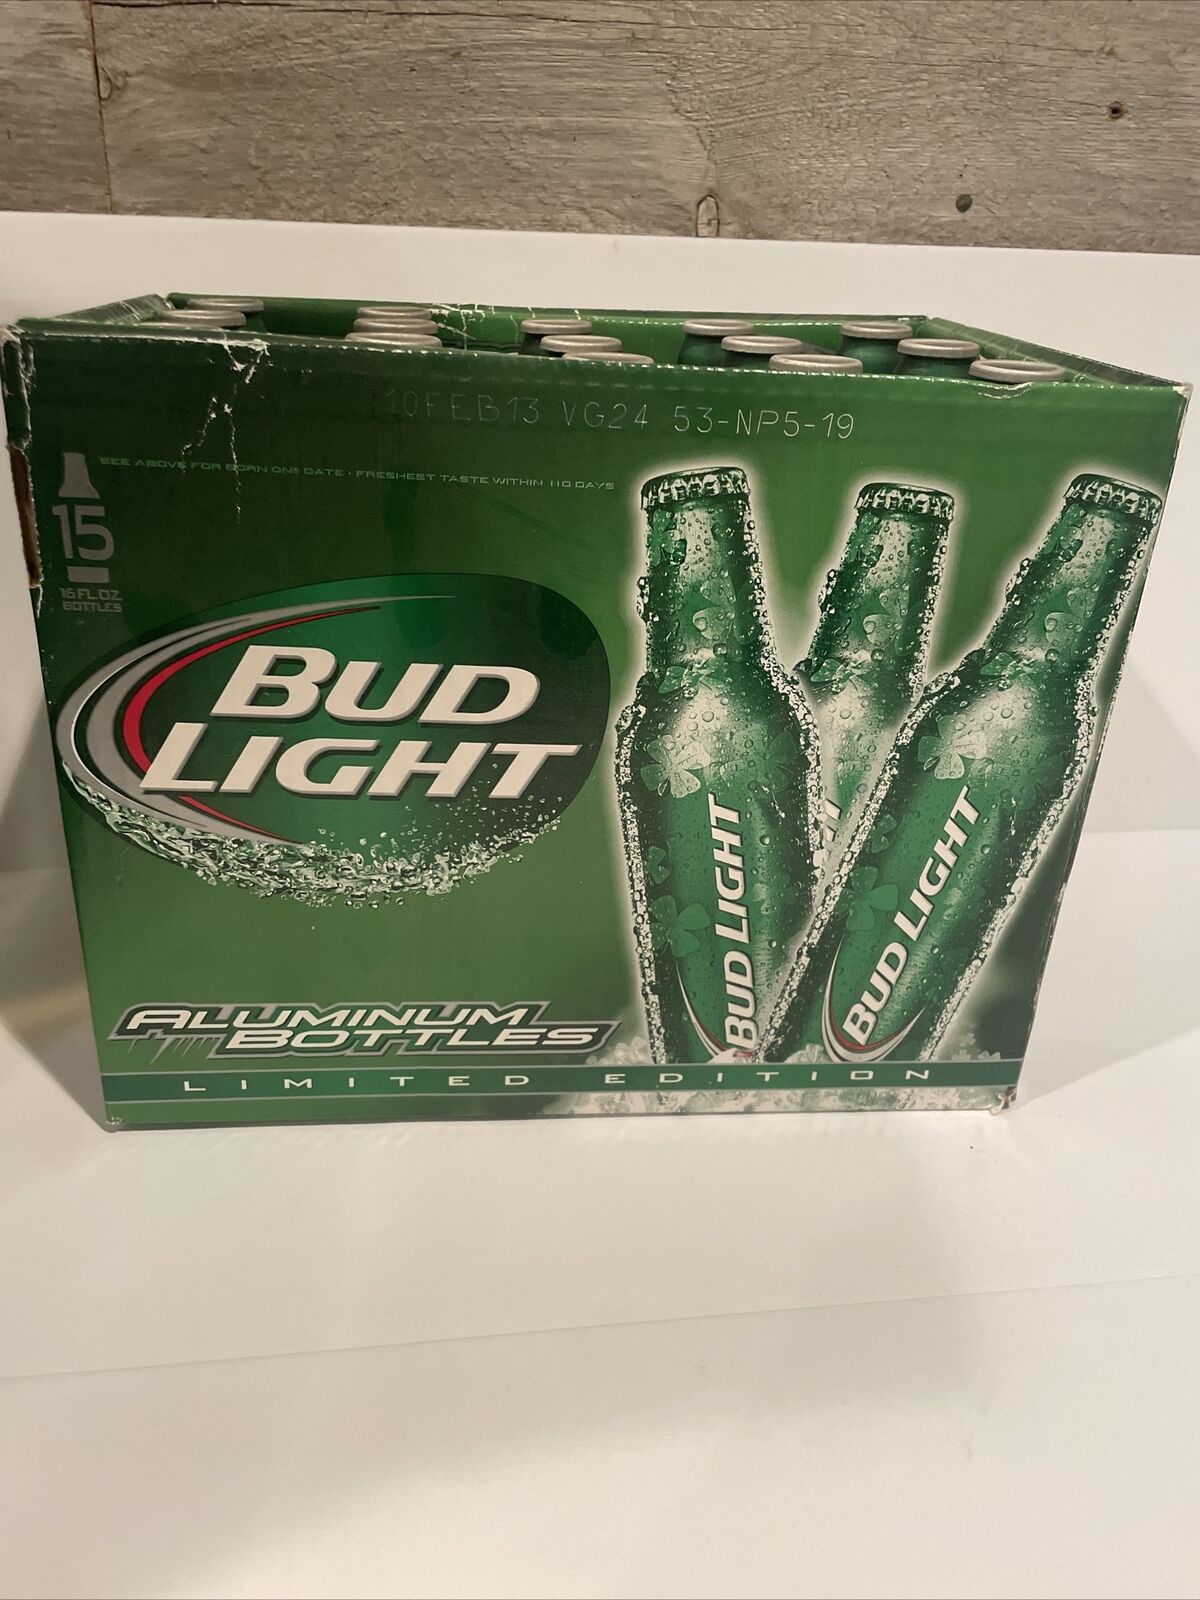 Collector Saint Patrick’s Day Bud Light Bottles - 15 Bottles and Original Box